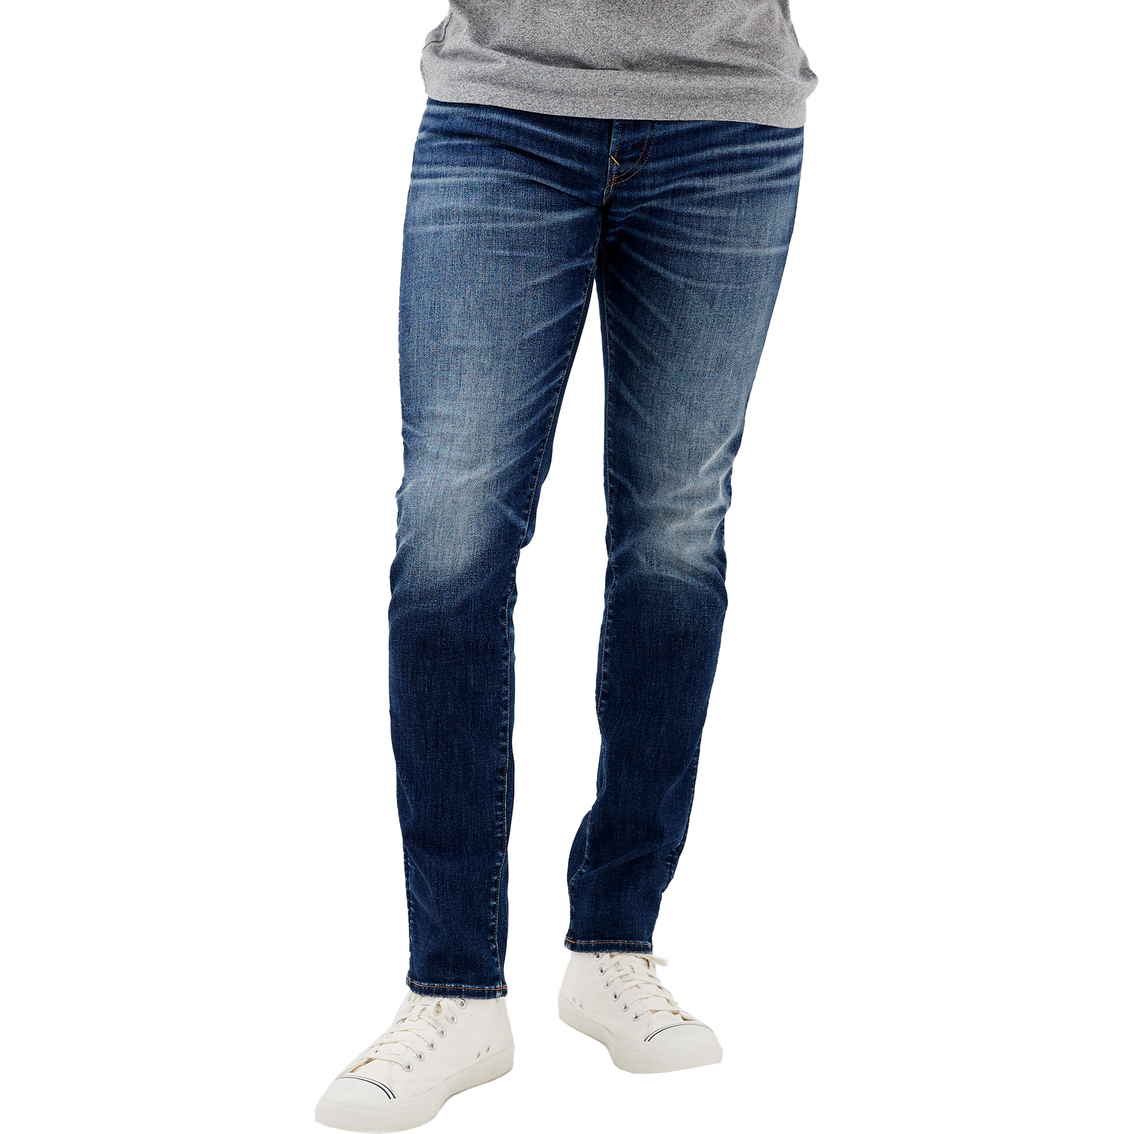 American Eagle Airflex+ Temp Tech Slim Jeans | Jeans | Clothing ...